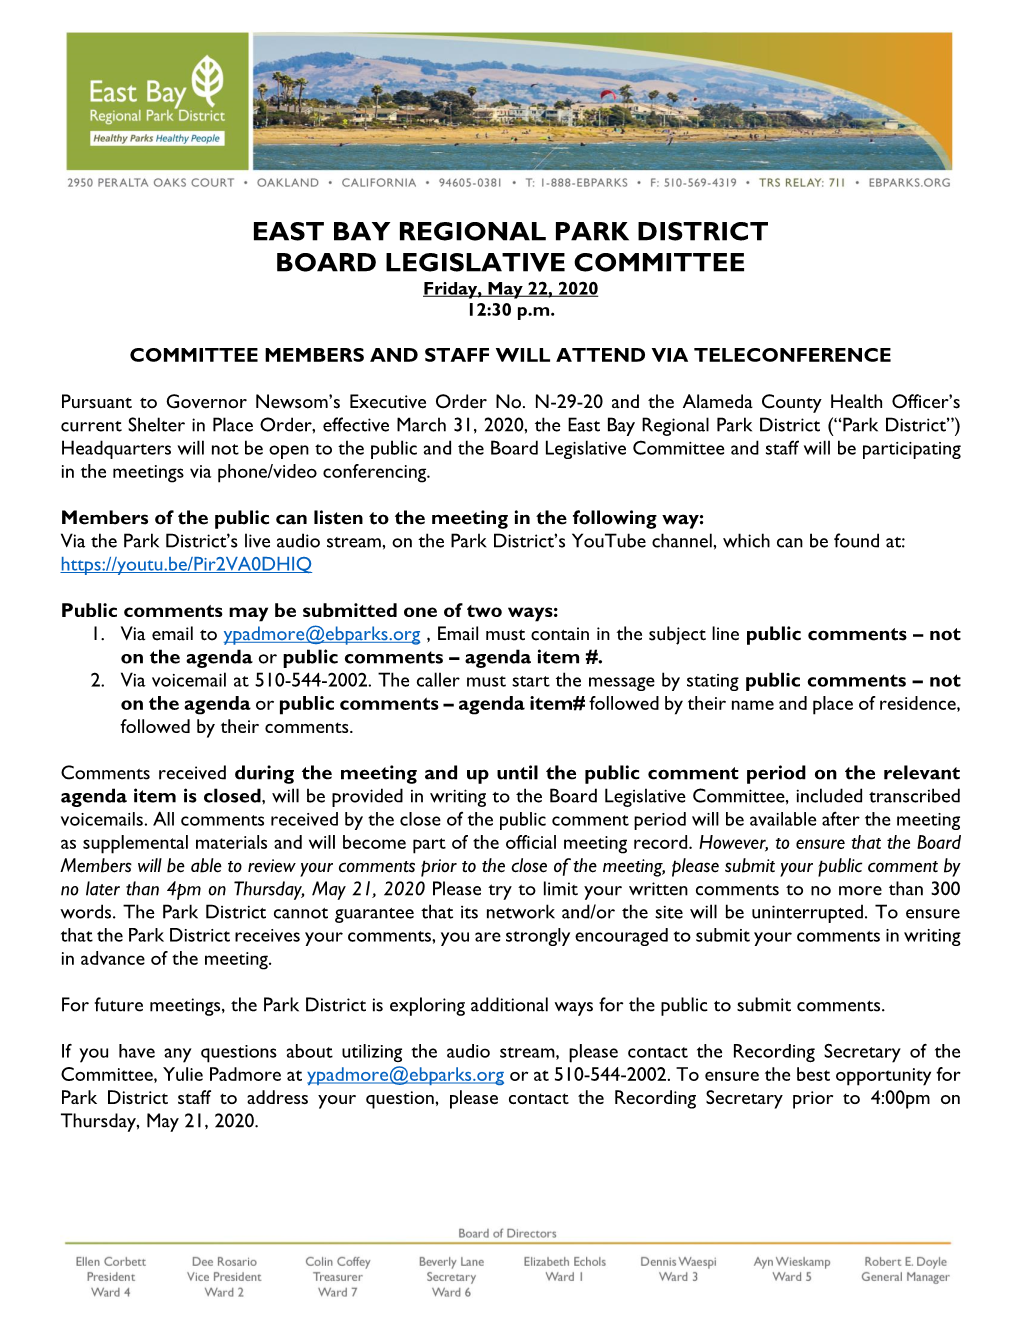 EAST BAY REGIONAL PARK DISTRICT BOARD LEGISLATIVE COMMITTEE Friday, May 22, 2020 12:30 P.M